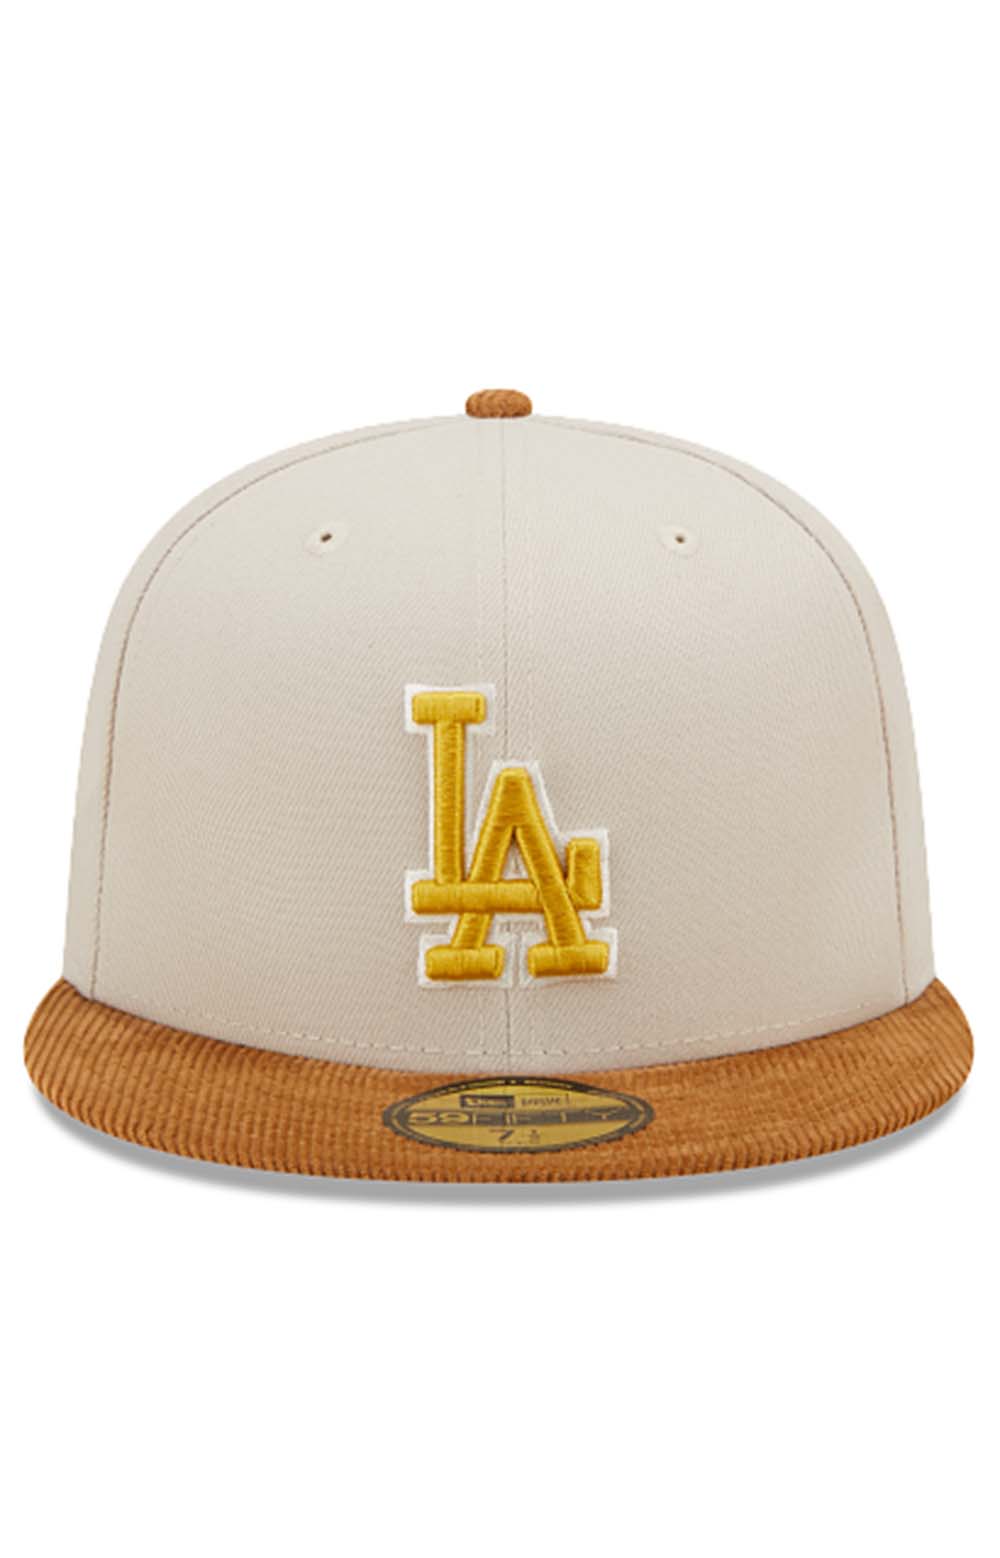 LA Dodgers Corduroy Visor 59FIFTY Fitted Hat (60296381)